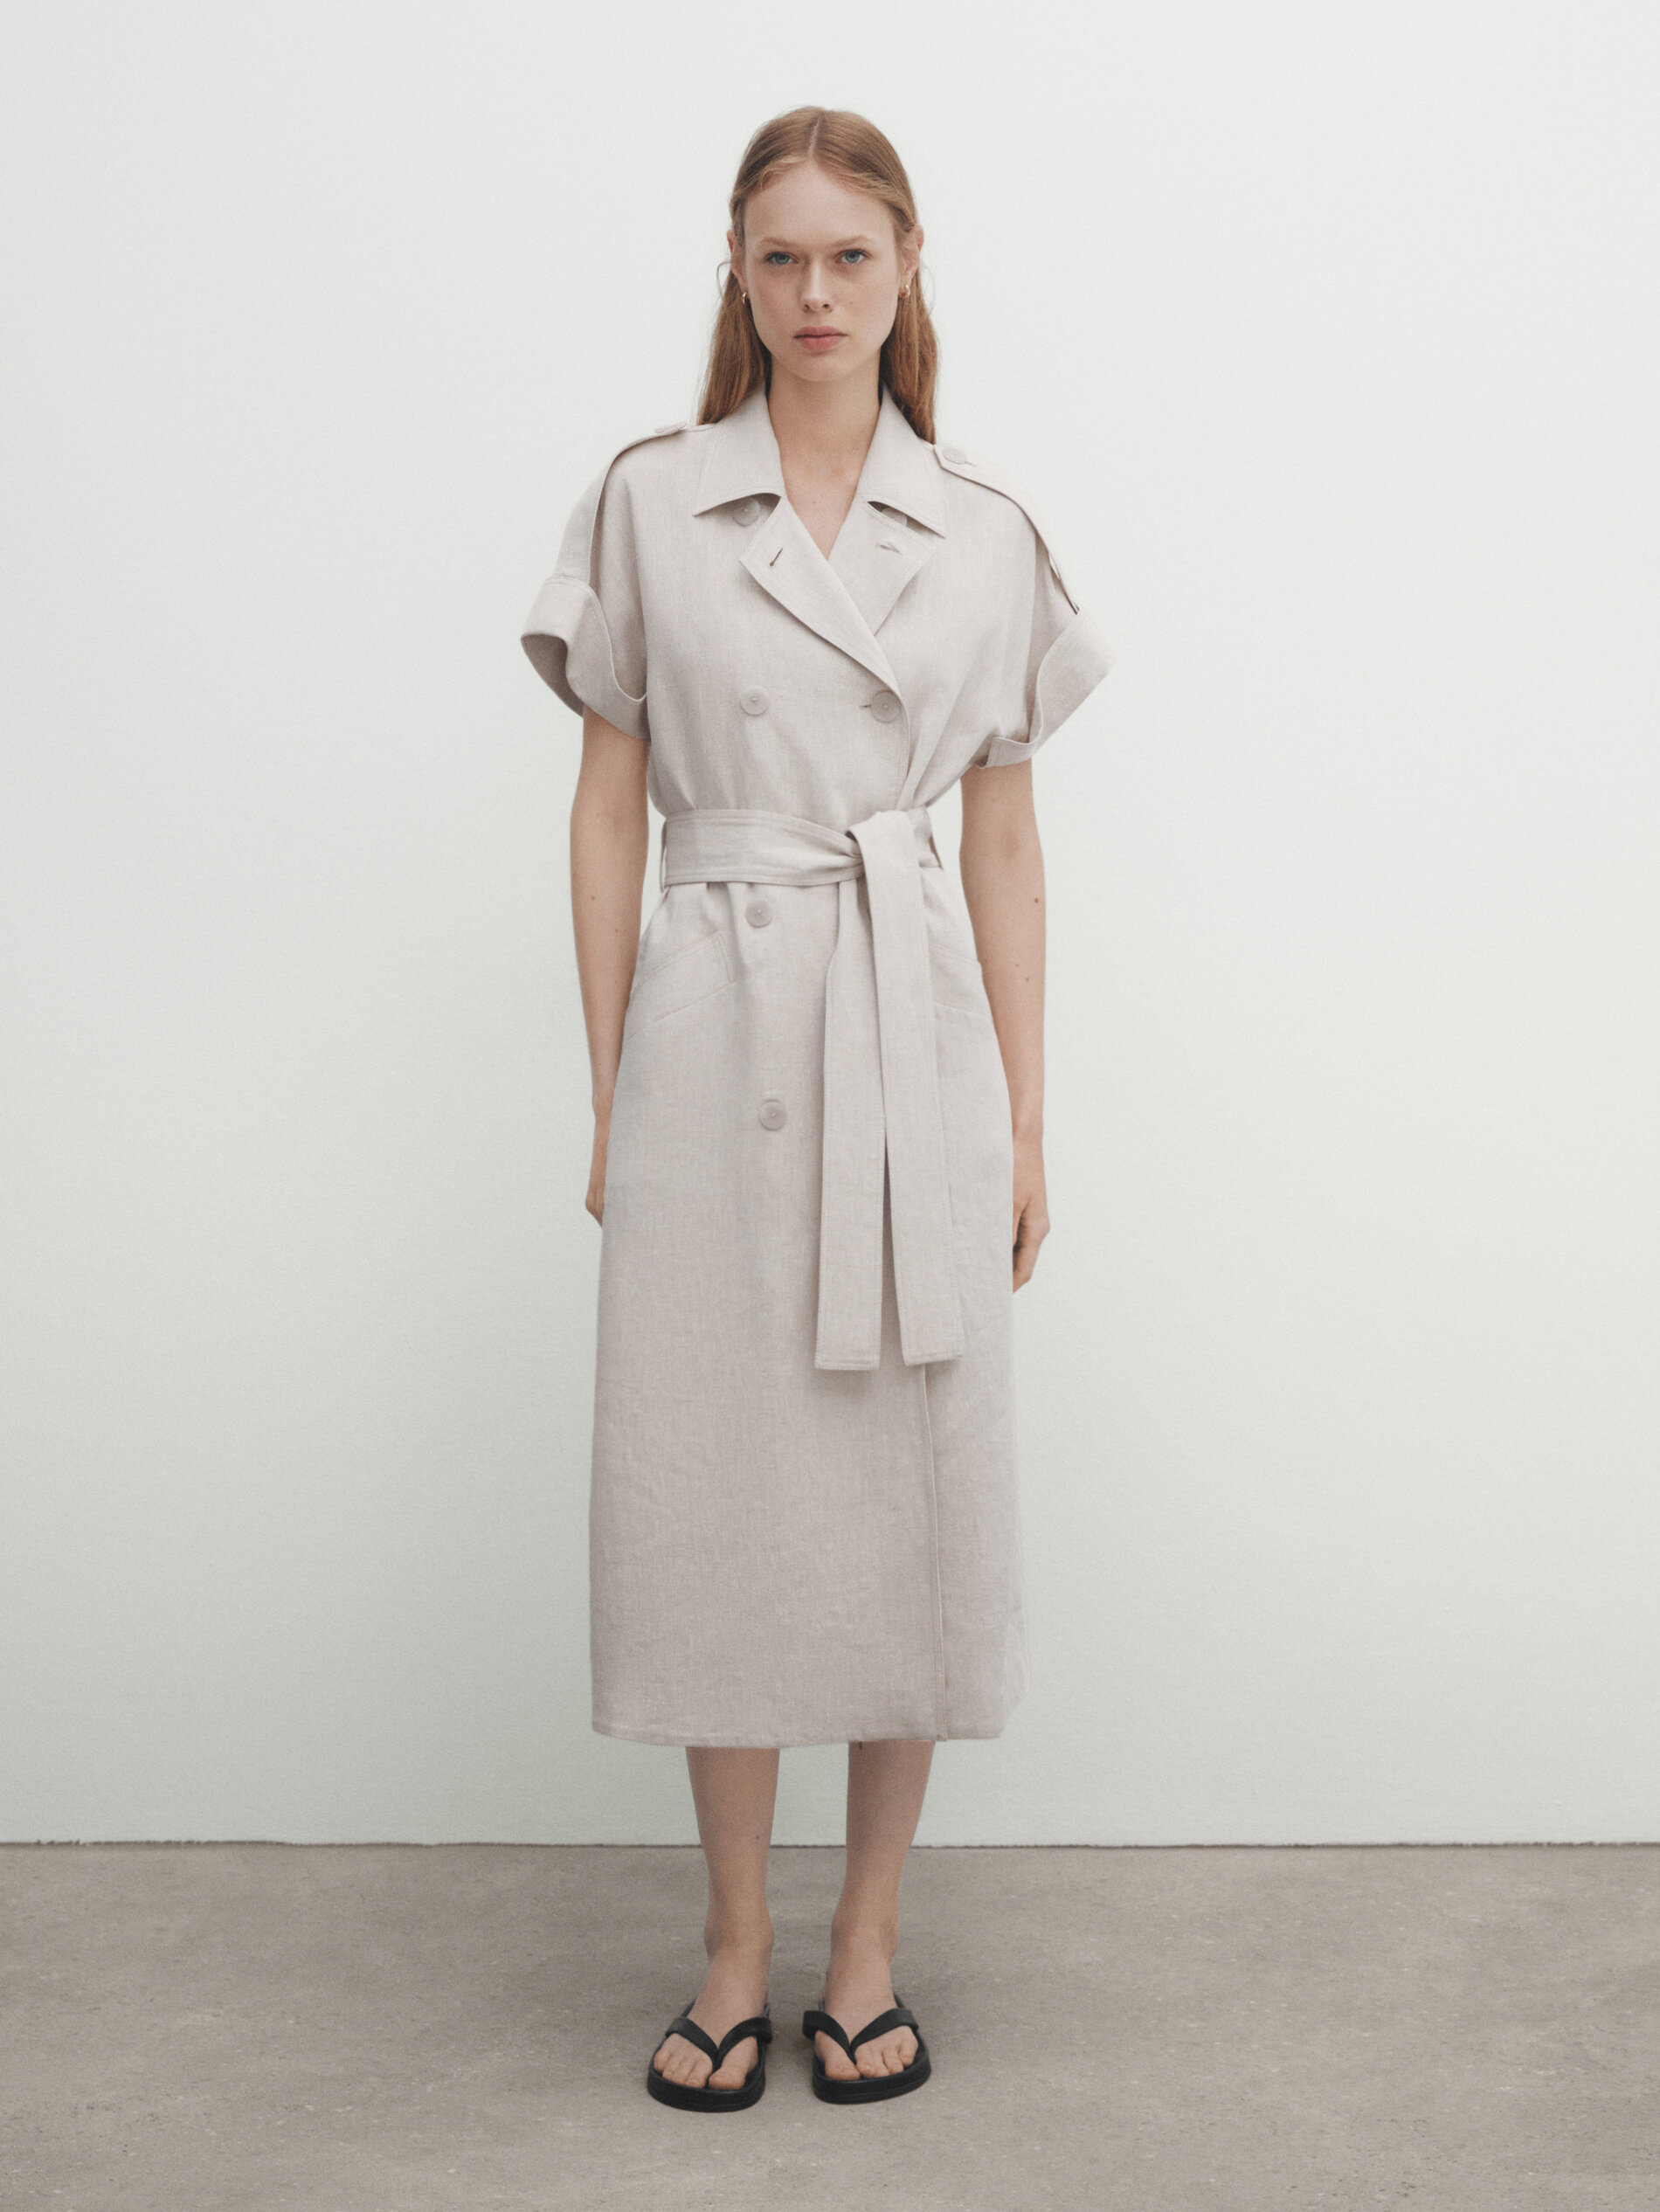 Linen blend trench coat dress with belt